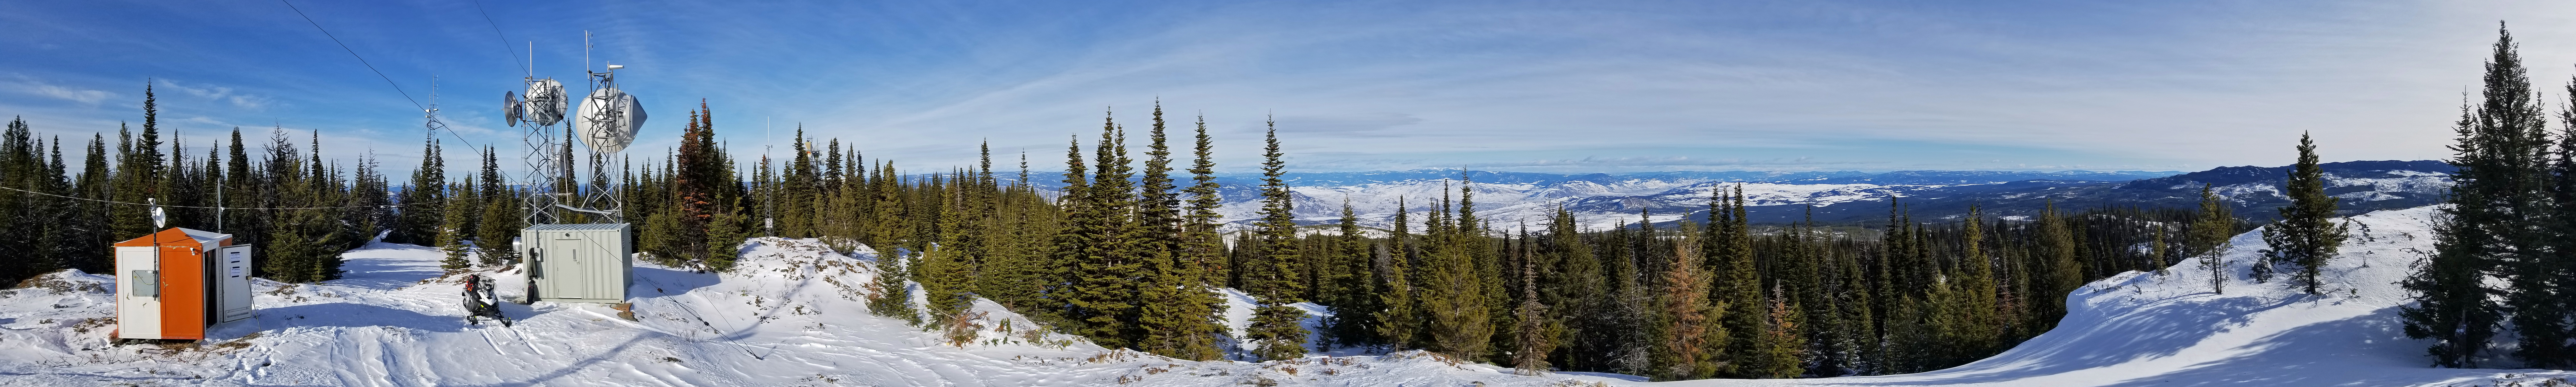 Panorama from Greenstone Mtn, VE7RKA, Feb 5, 2022